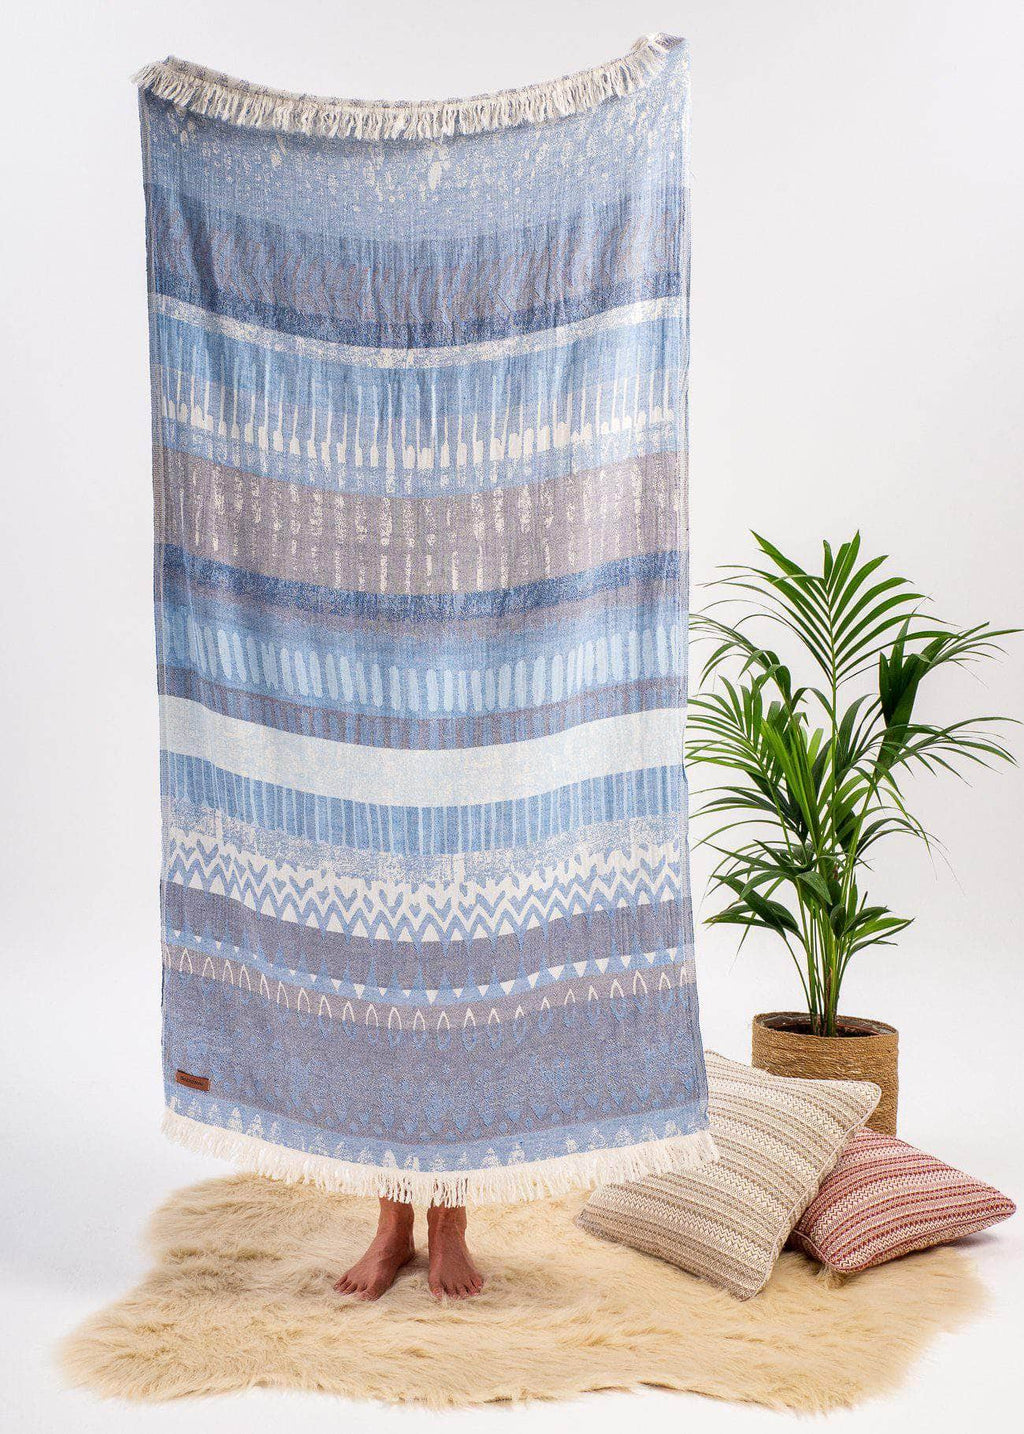 Dreamy Bezzazan minimalist stylish turkish towel, used as light throw in studio setting with throw pillows, fur rug, plant